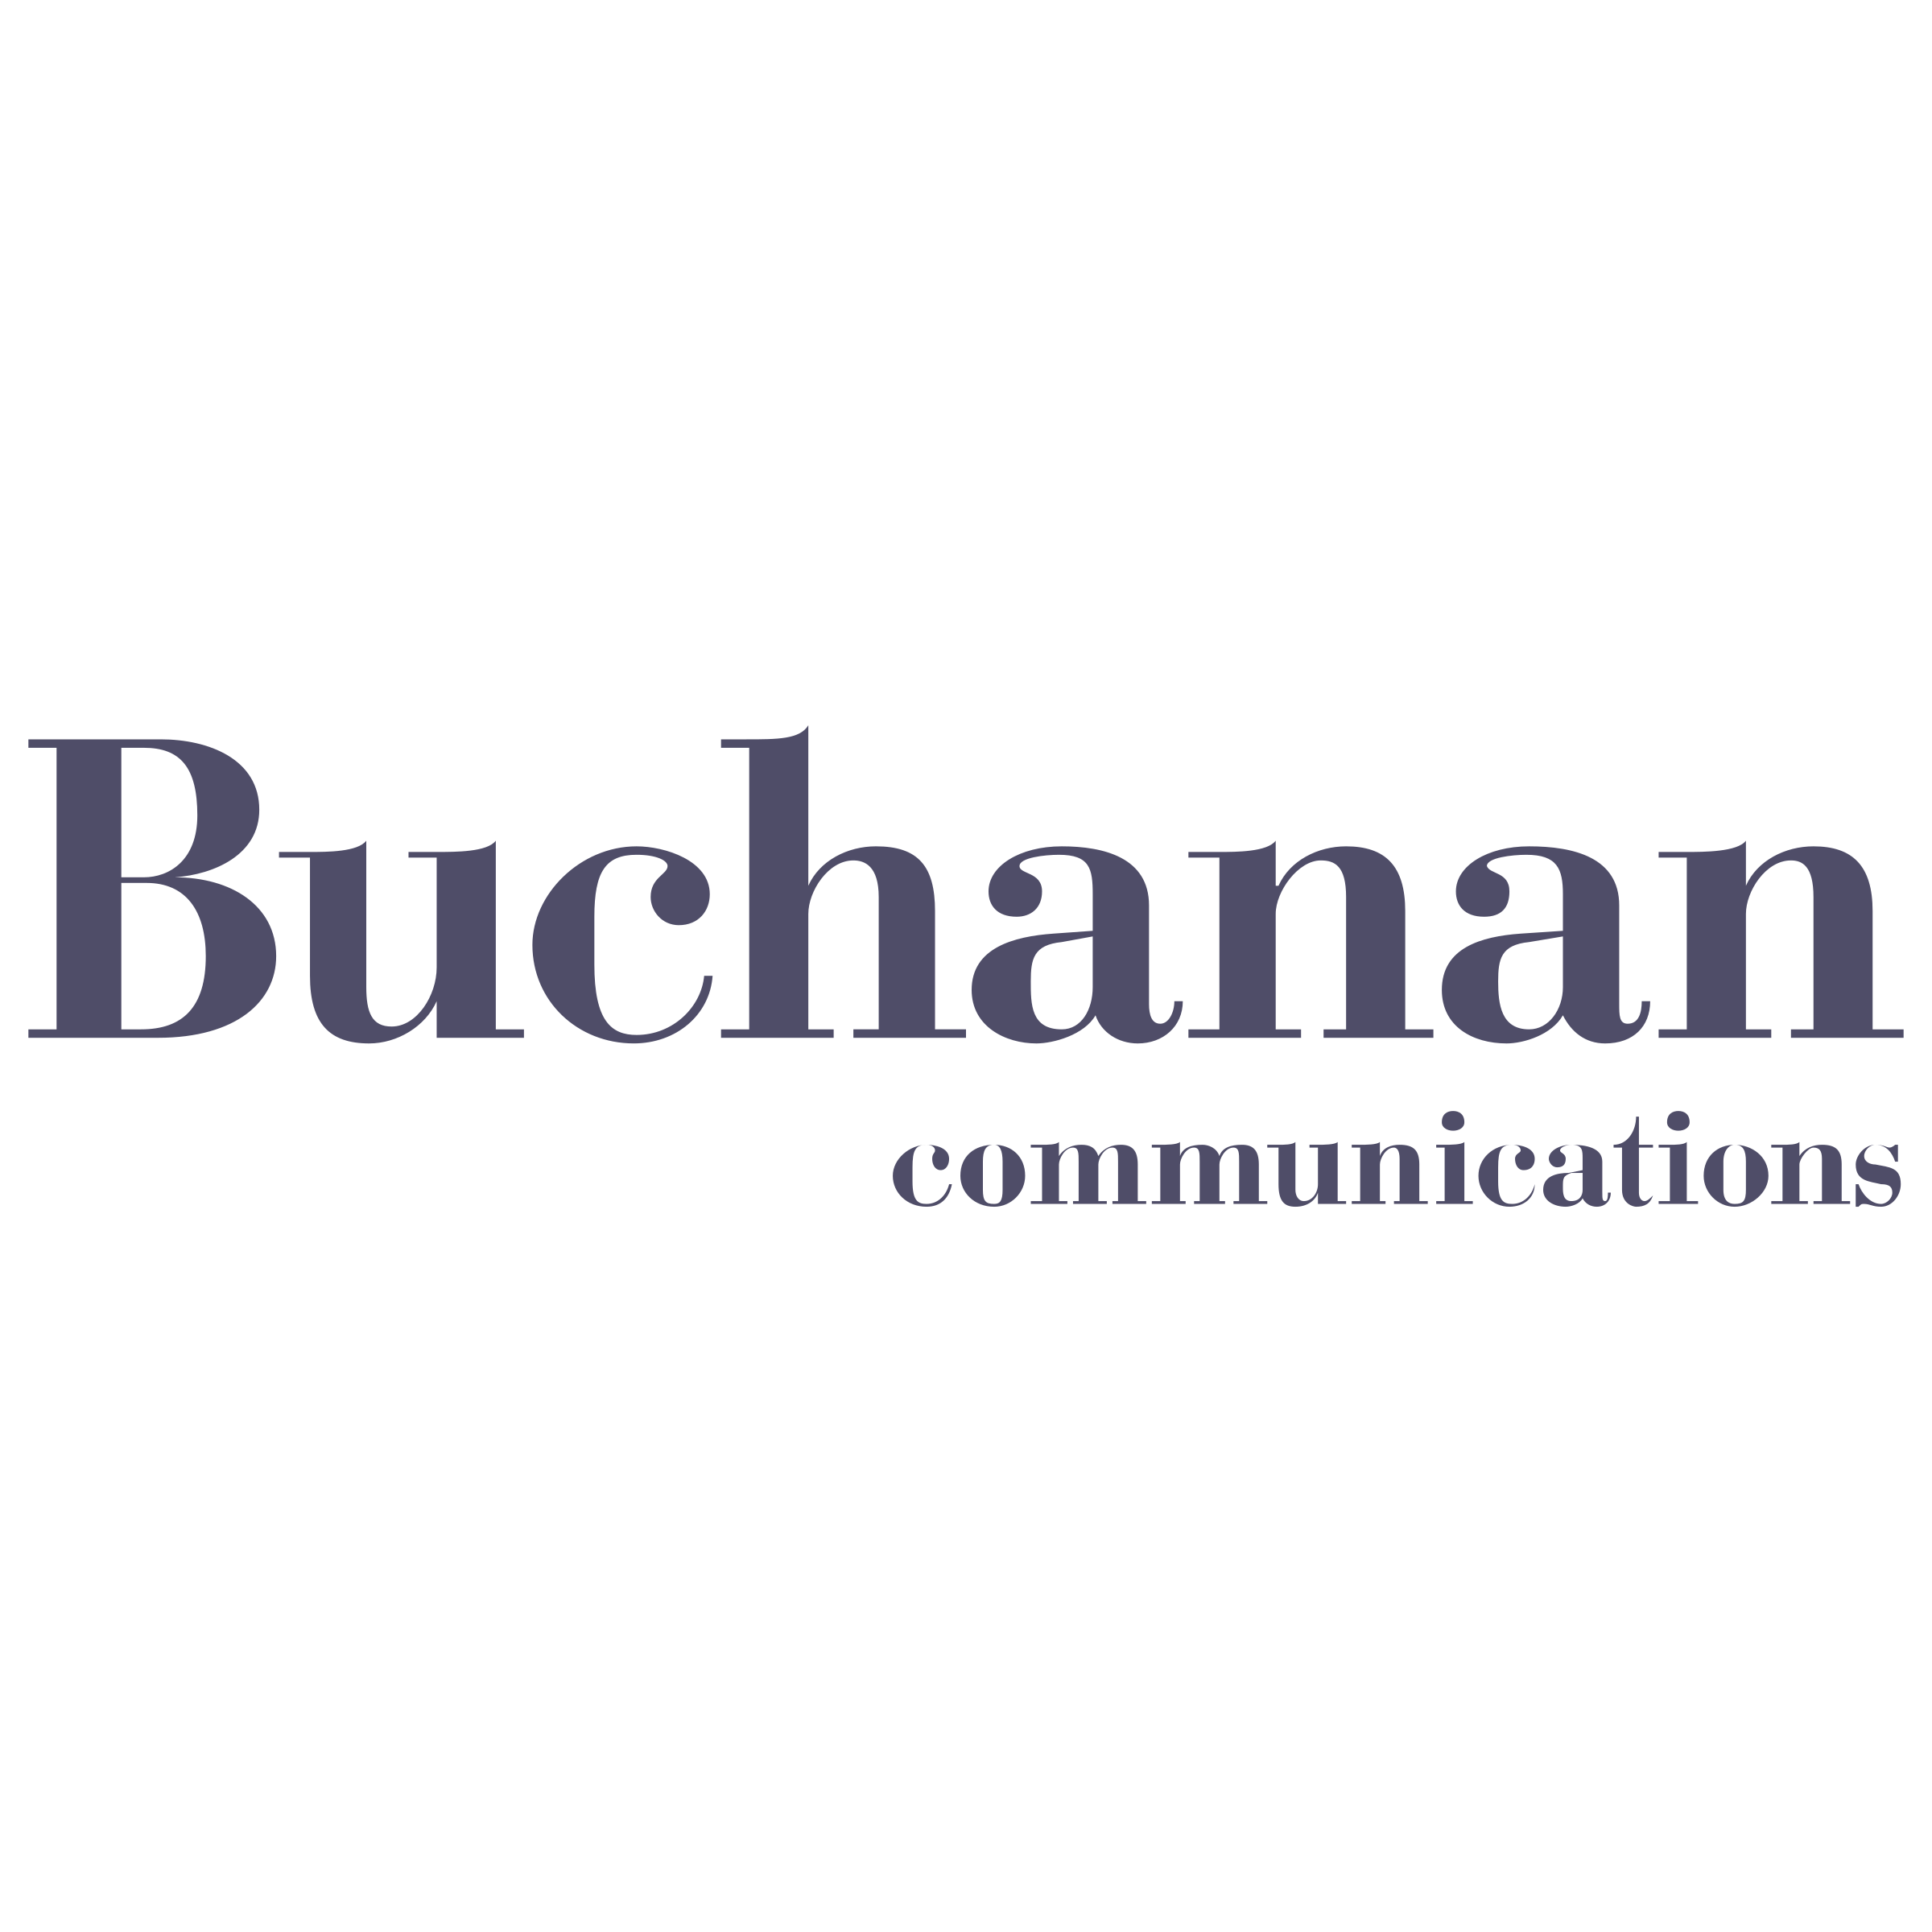 Bucannan Logo - Buchanan Communications Logo PNG Transparent & SVG Vector